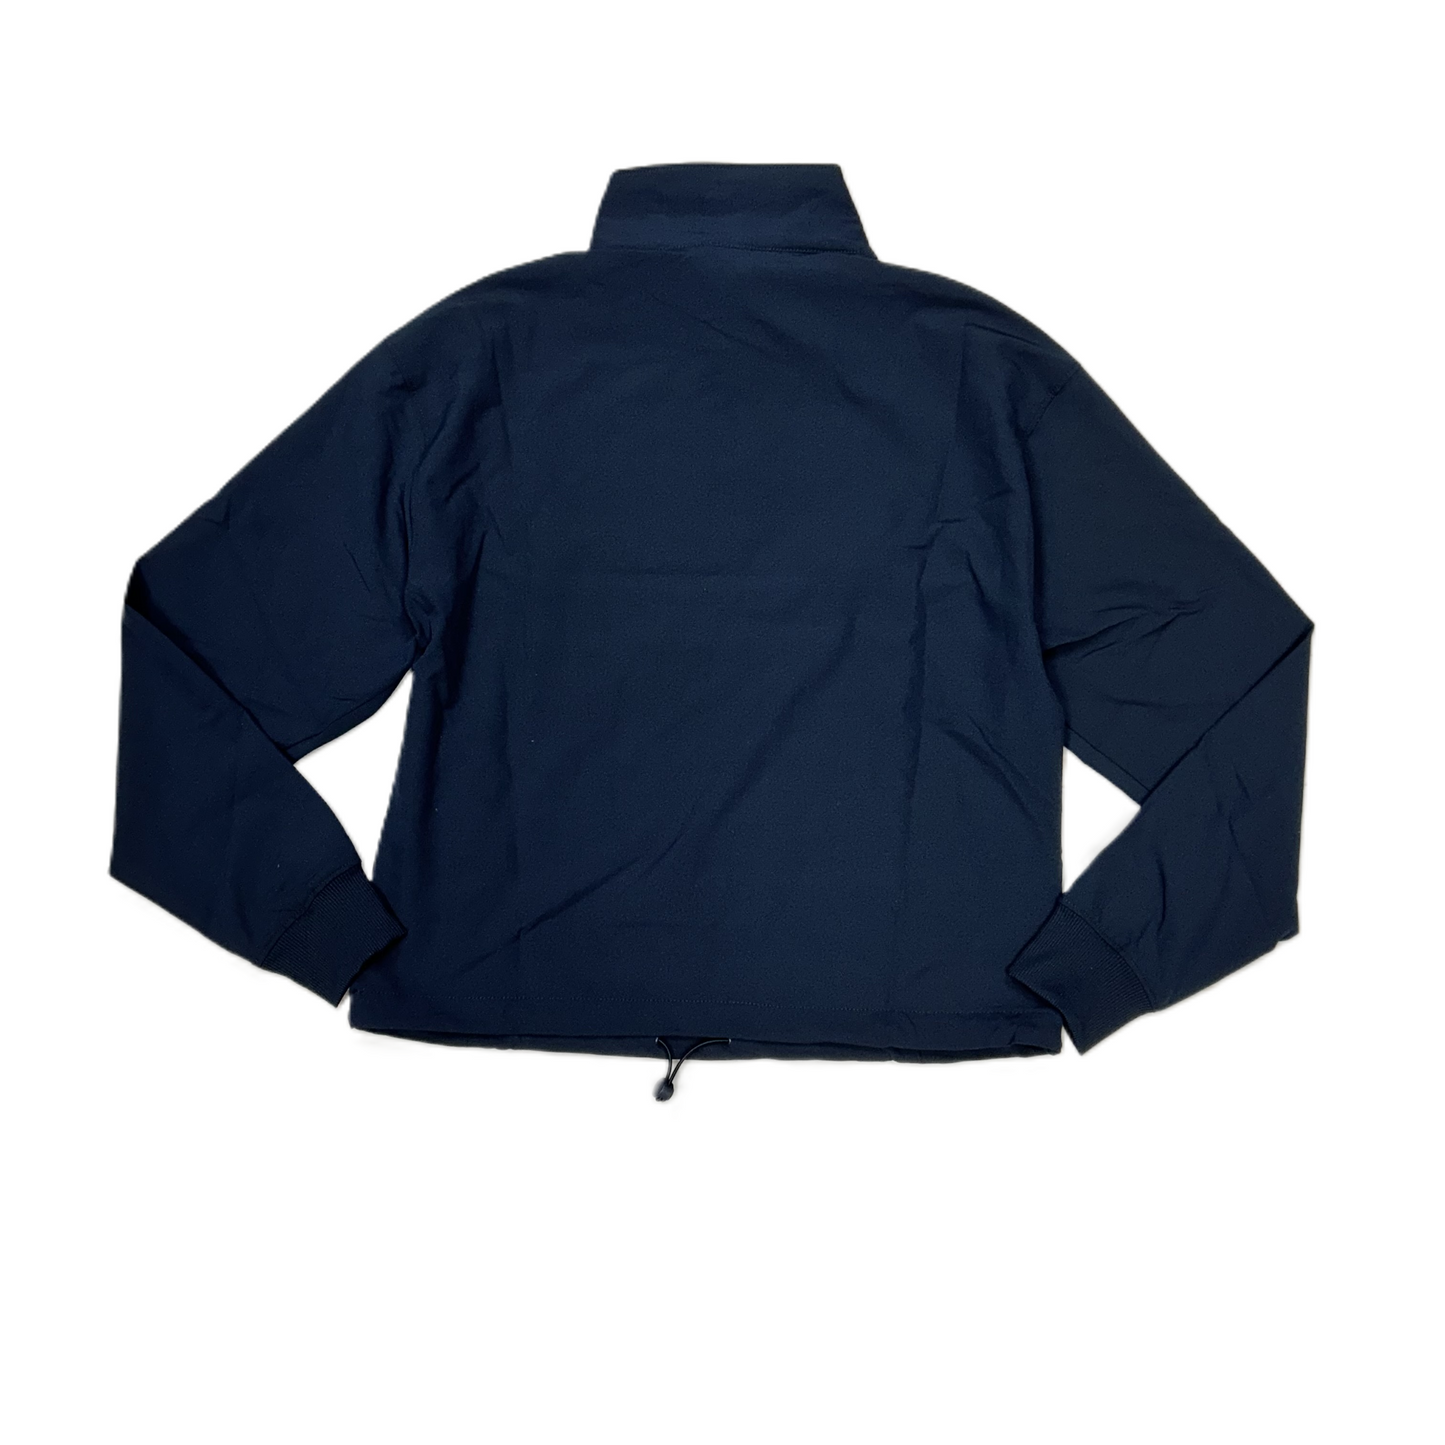 Athletic Jacket By Yogalicious  Size: M